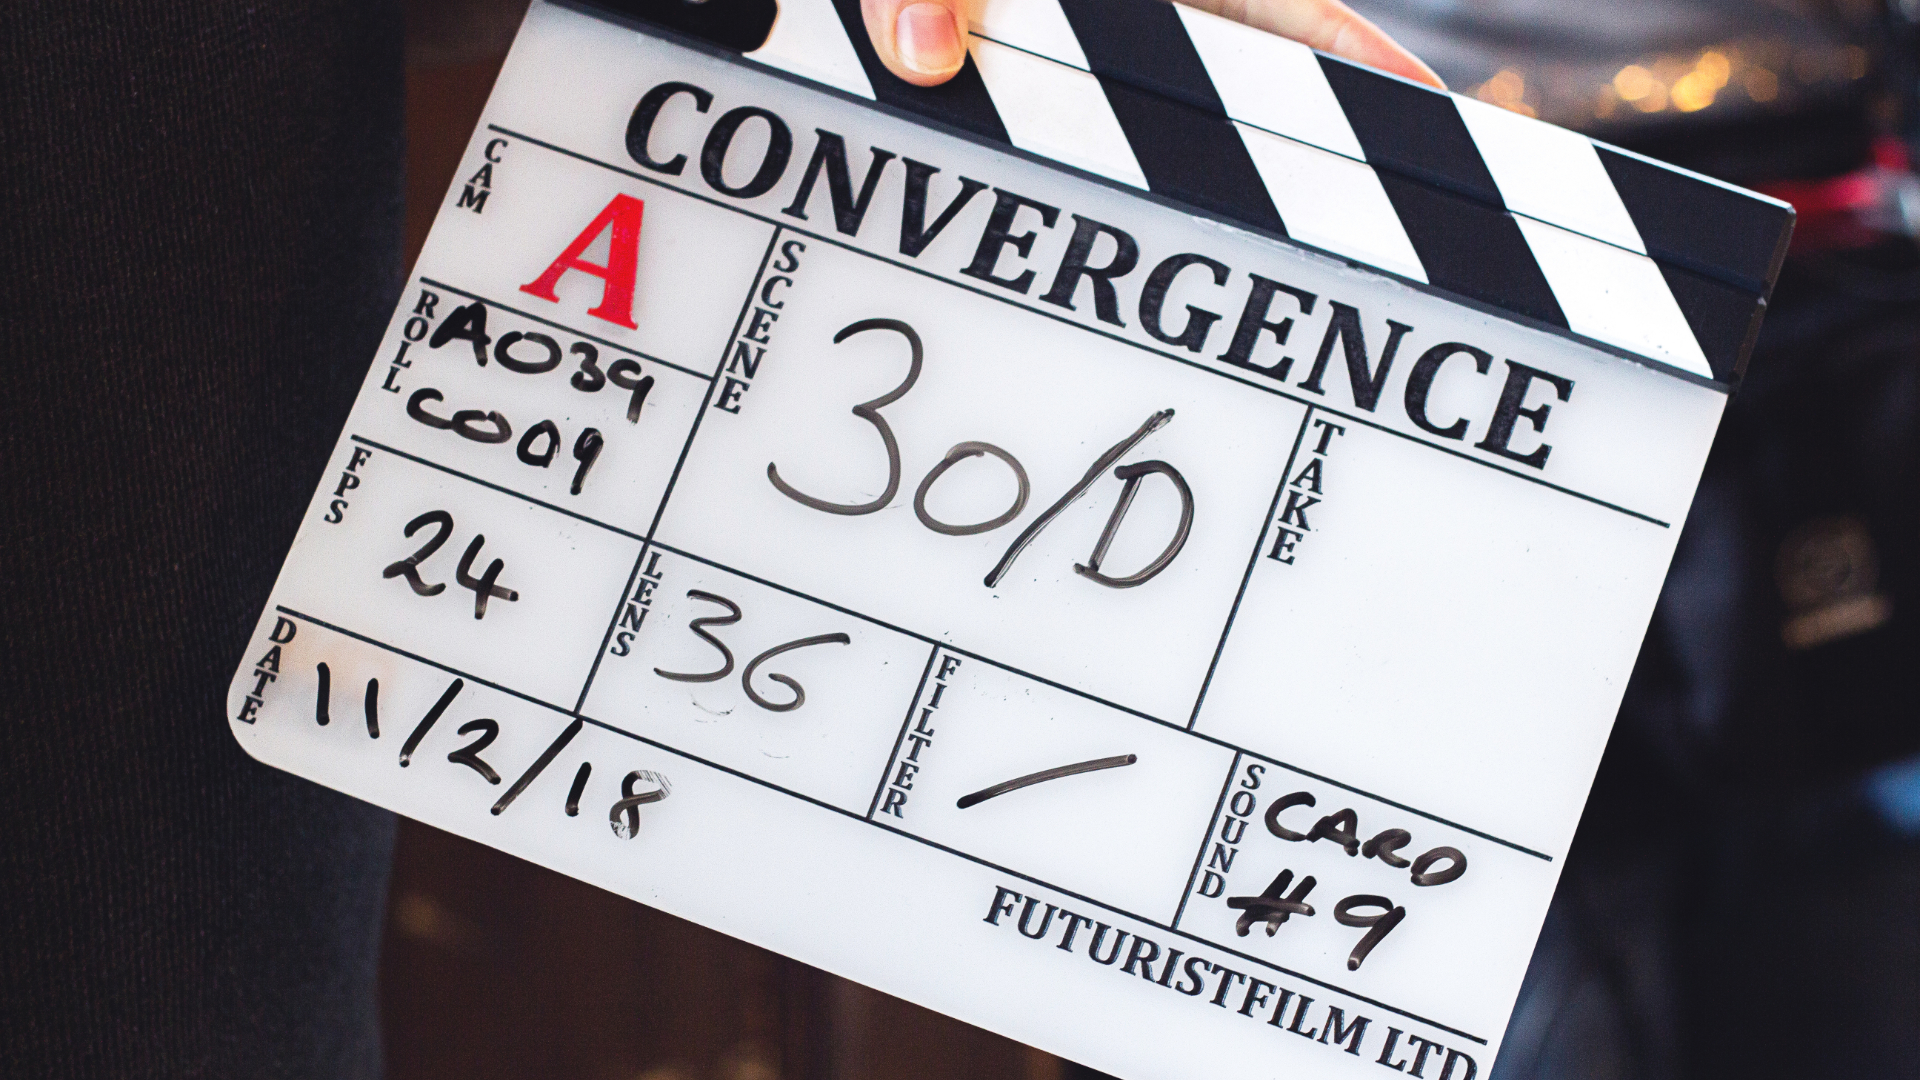 Convergence Reviews